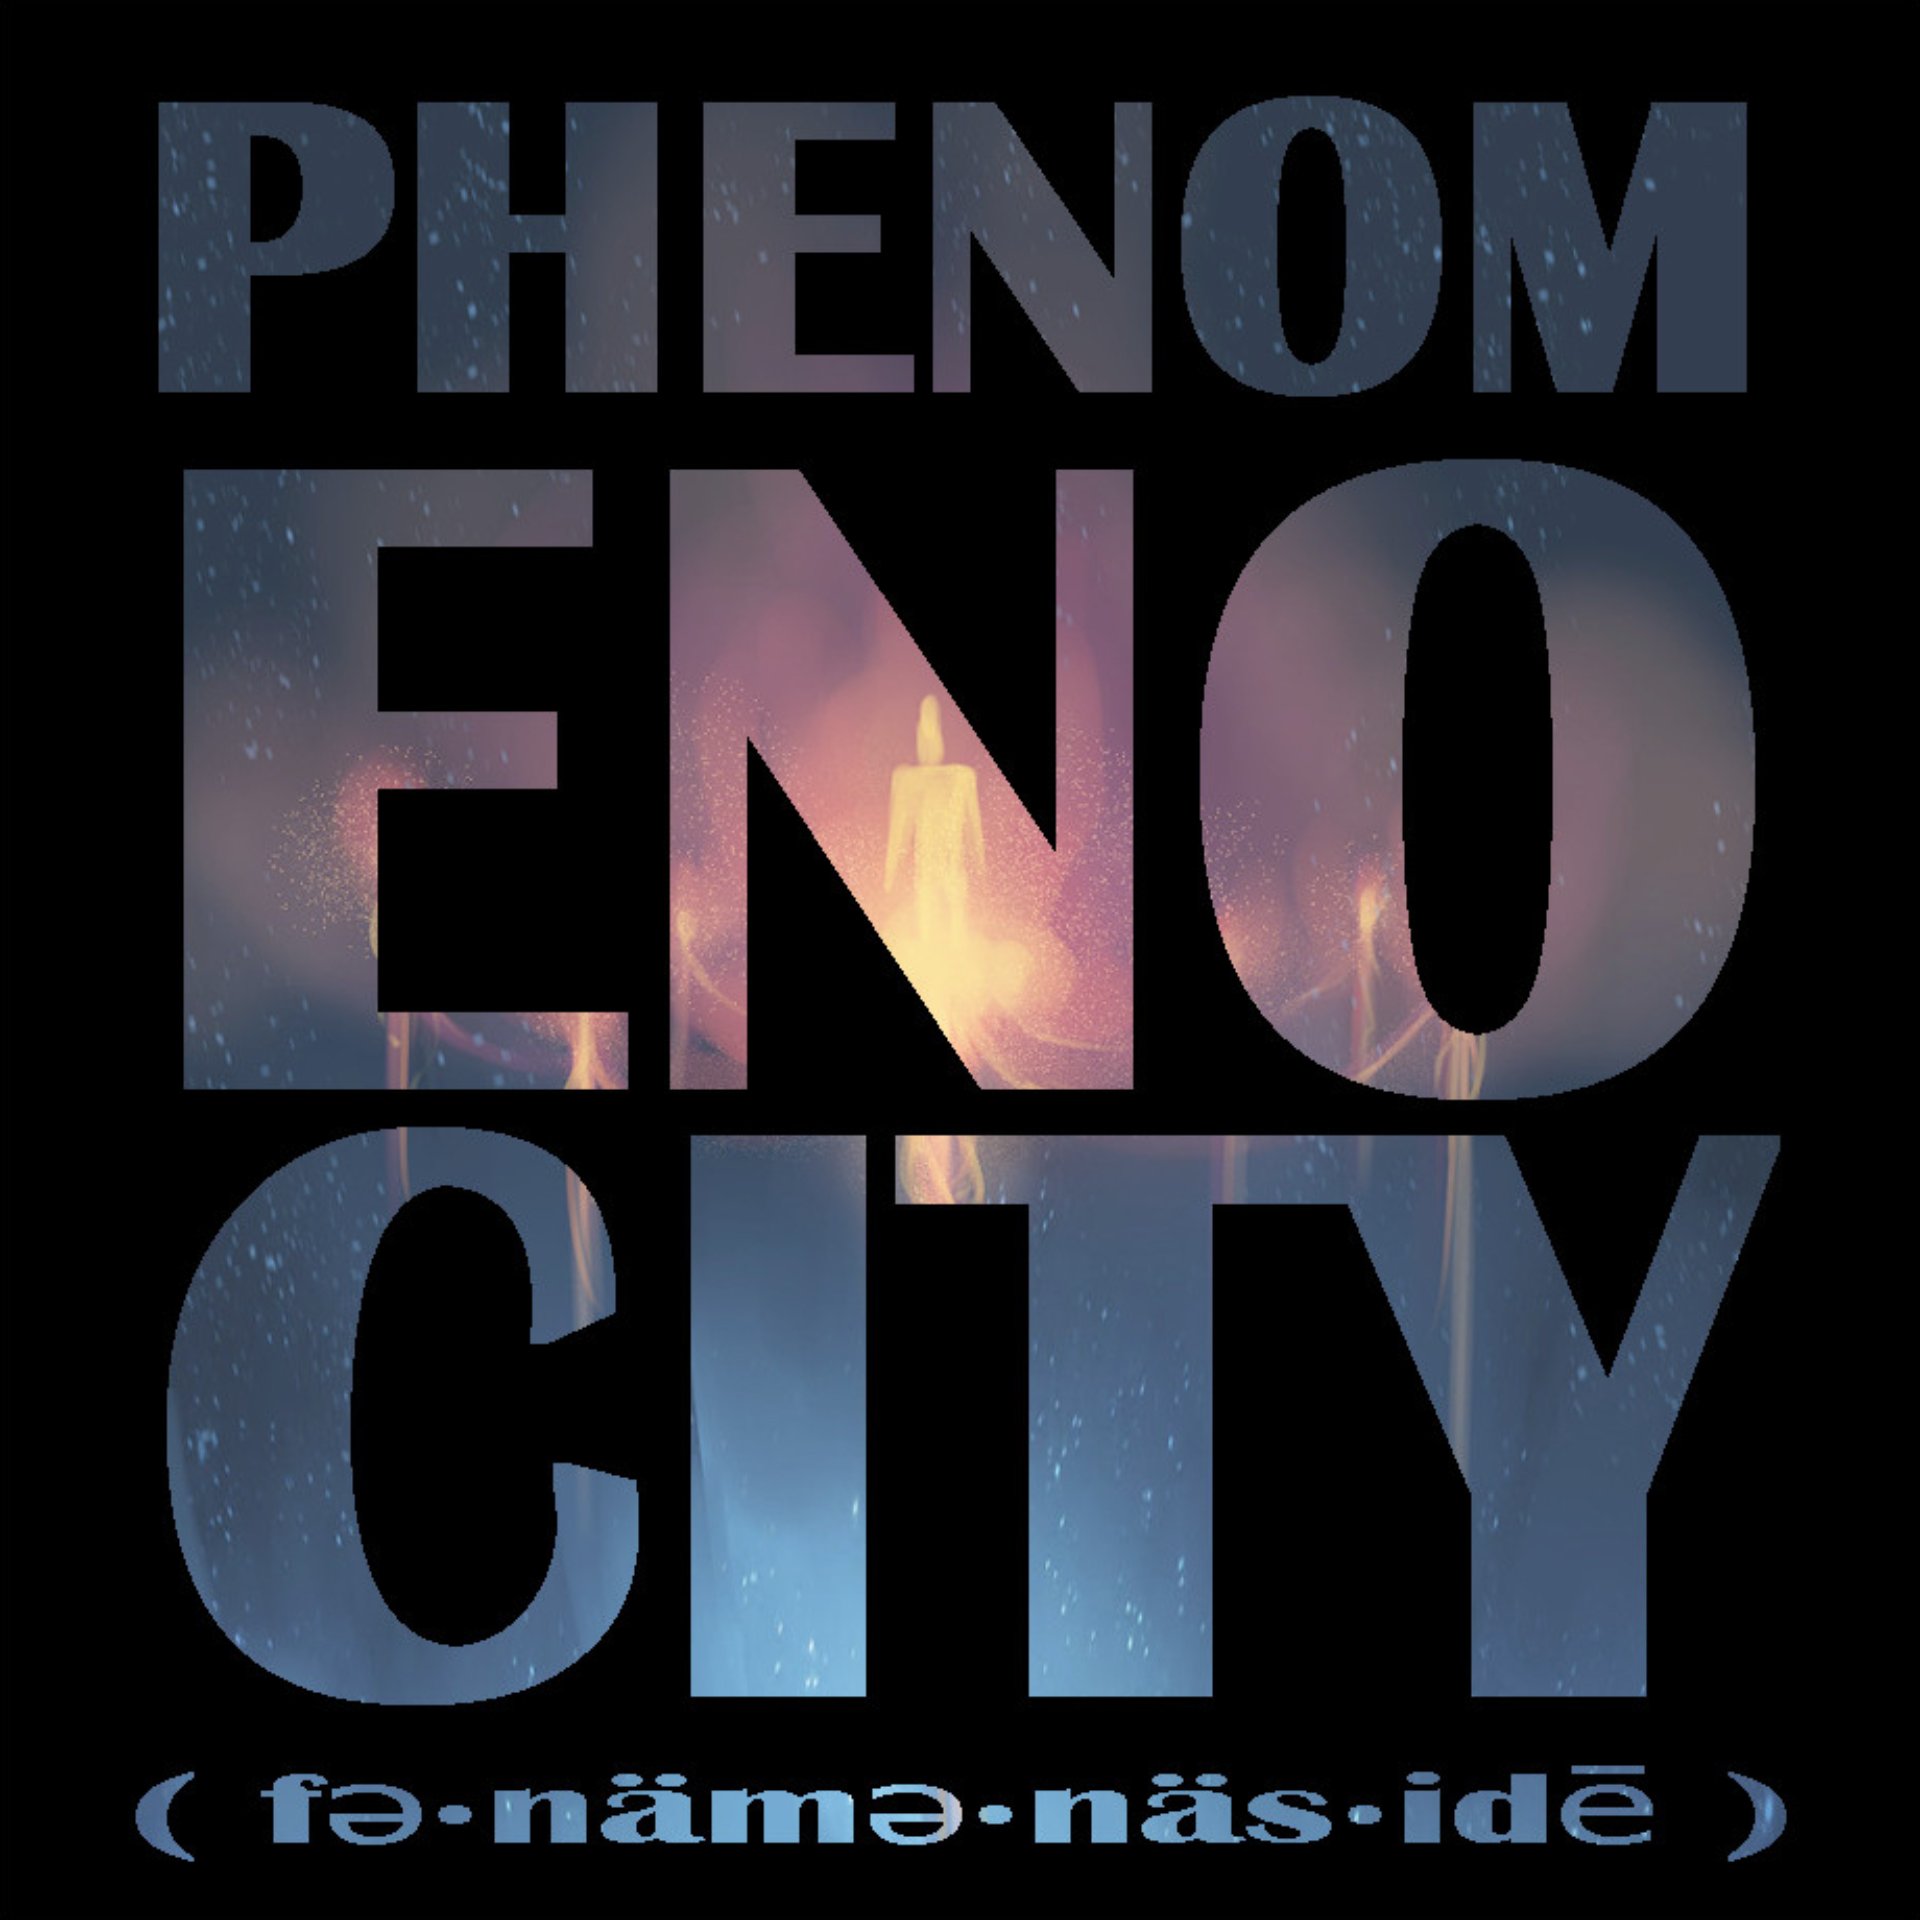 Phenomenocity logo